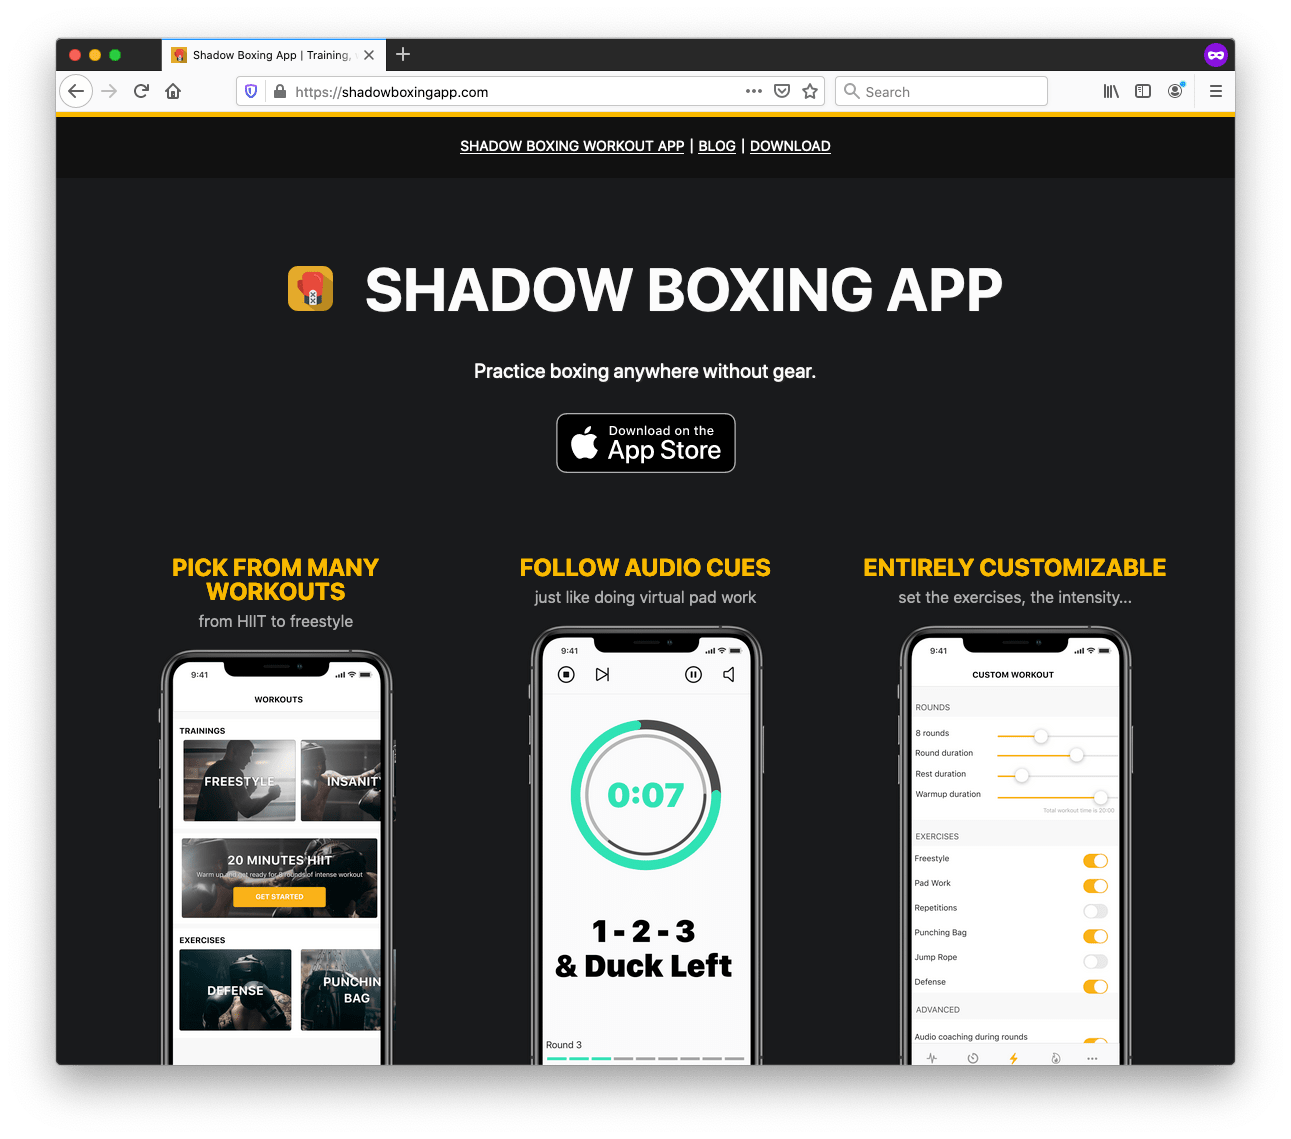 Shadow boxing app website